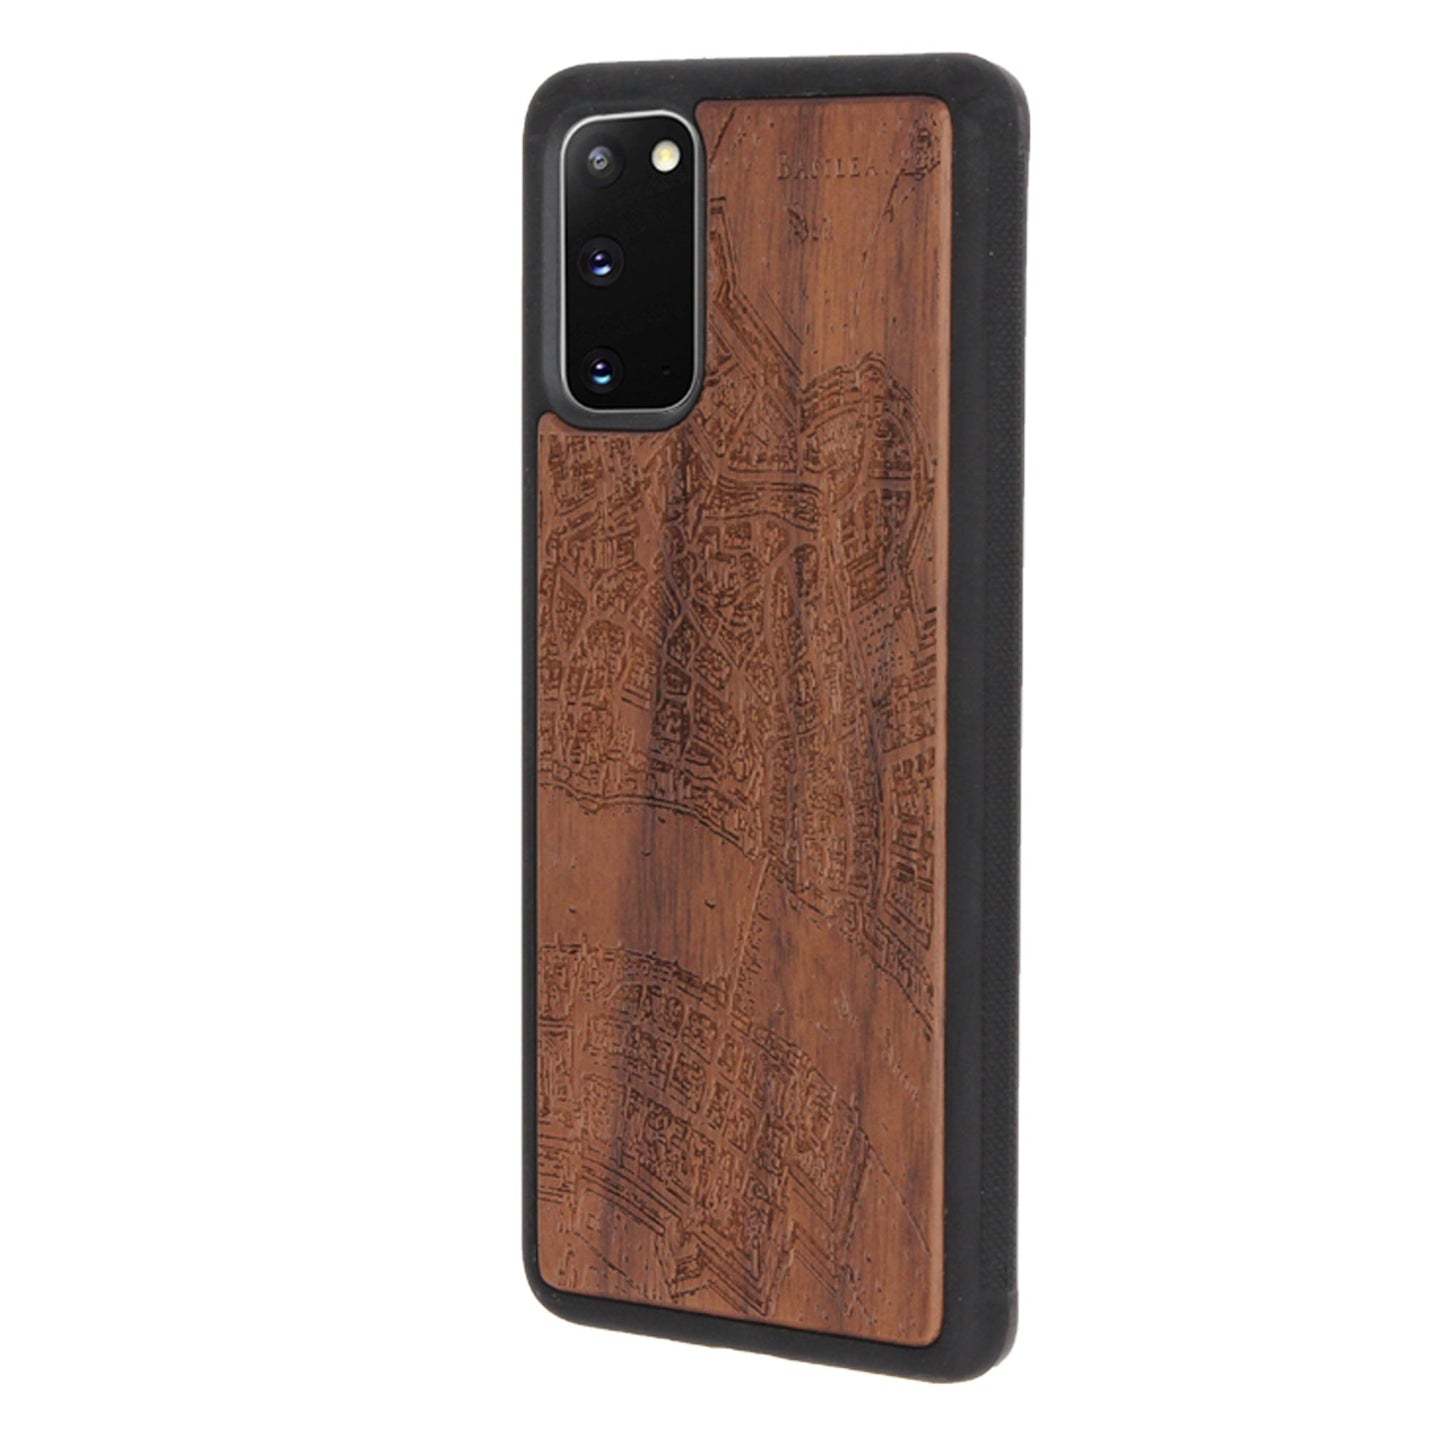 Basel Merian Eden case made of walnut wood for Samsung Galaxy S20